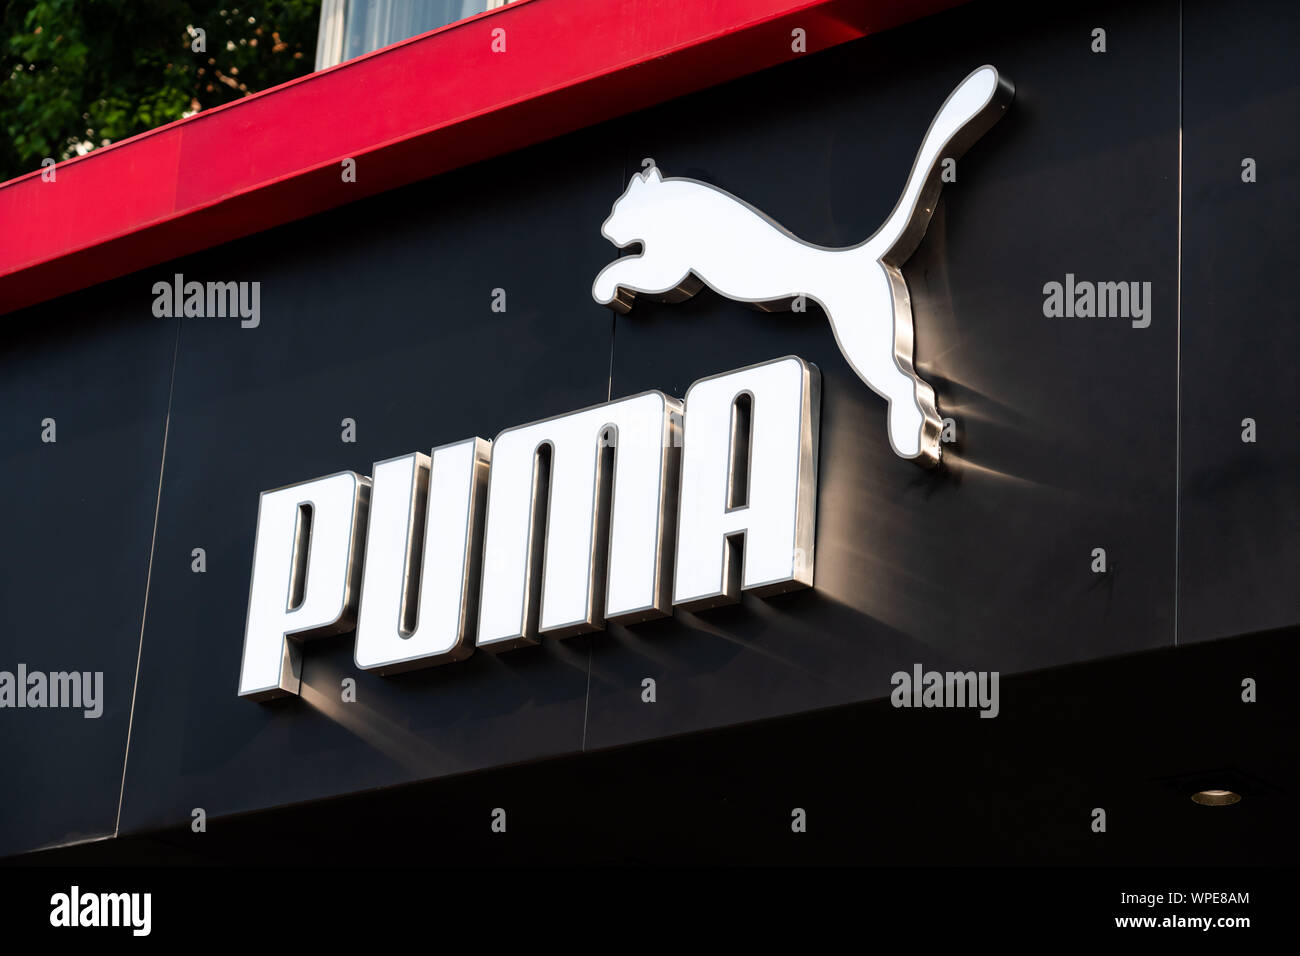 puma sportswear company